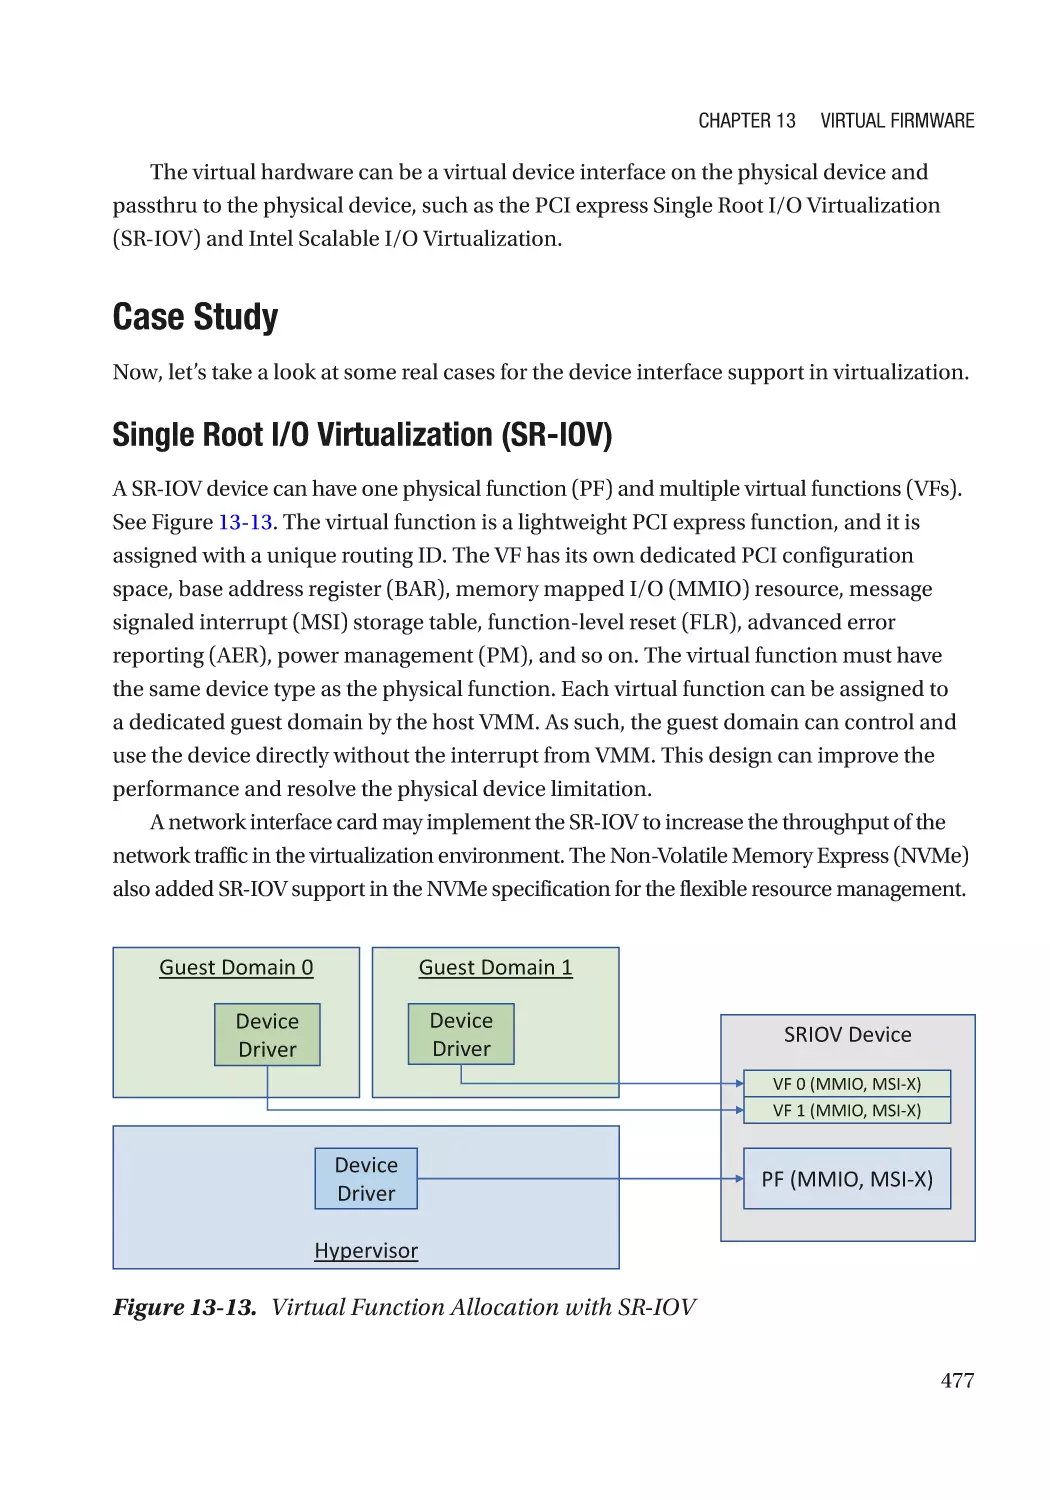 Case Study
Single Root I/O Virtualization (SR-IOV)